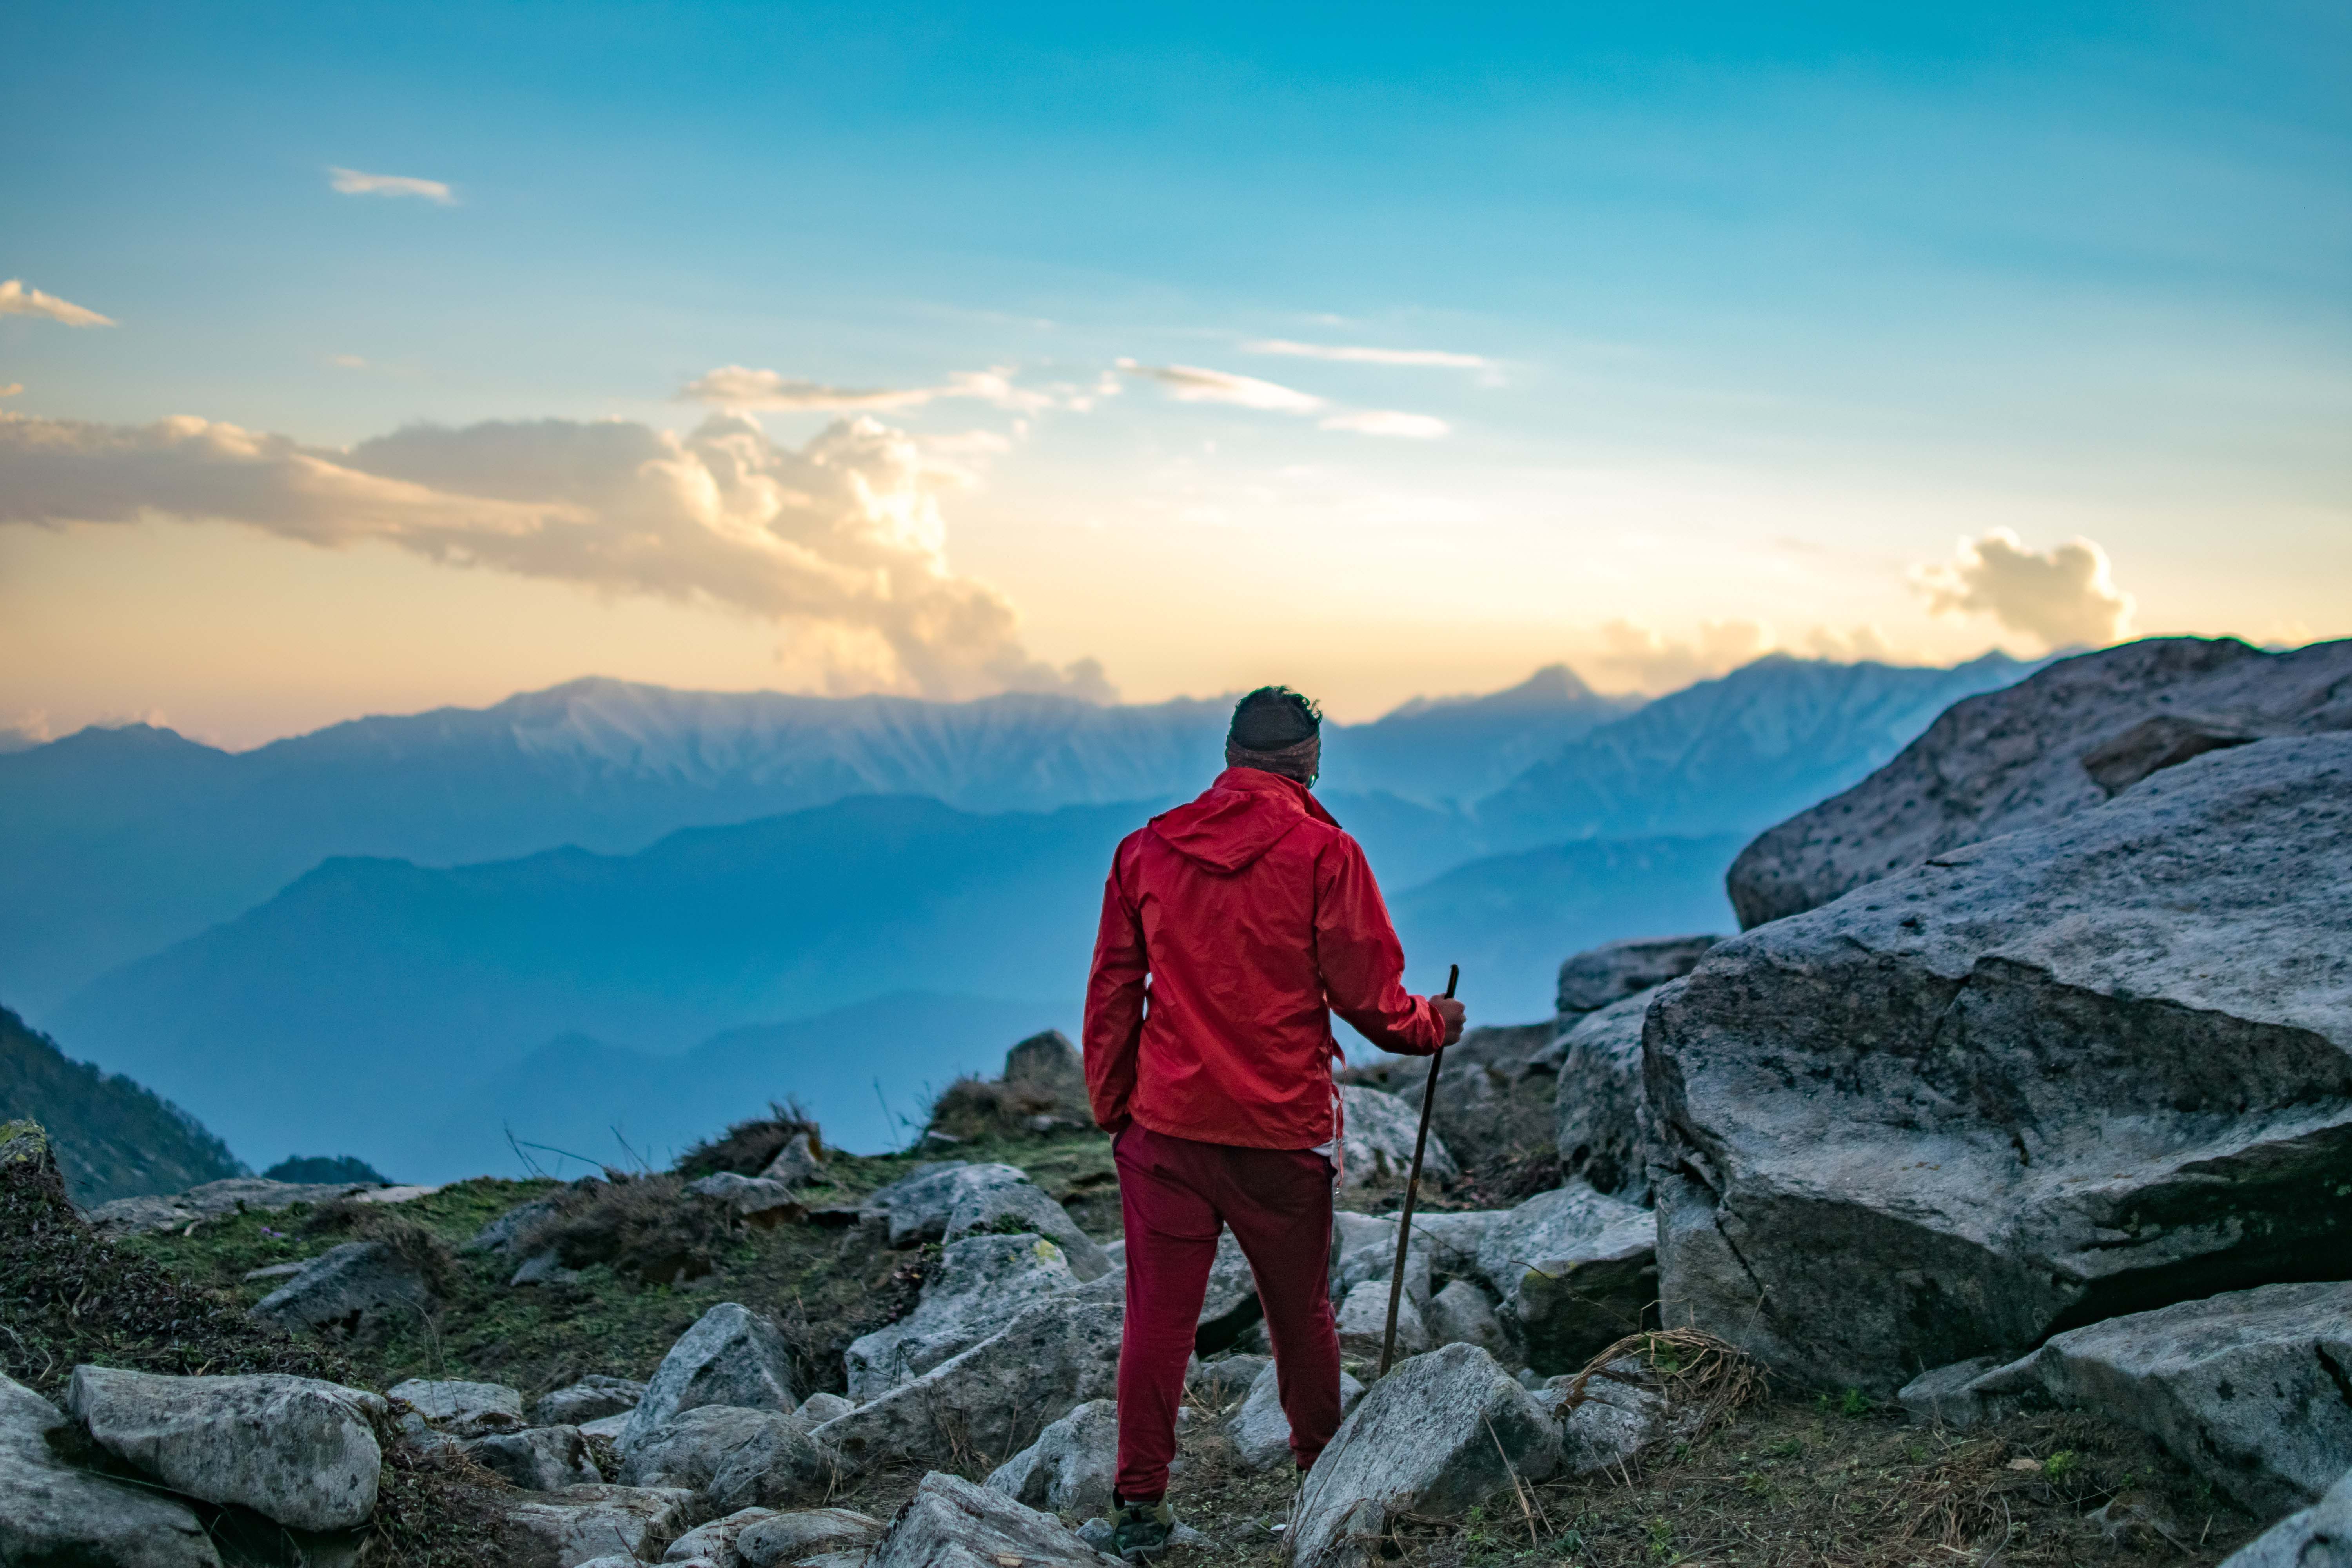 Rahasia di Balik Berhasilnya Mendaki Gunung: Tips Naik Gunung yang Wajib Anda Ketahui!